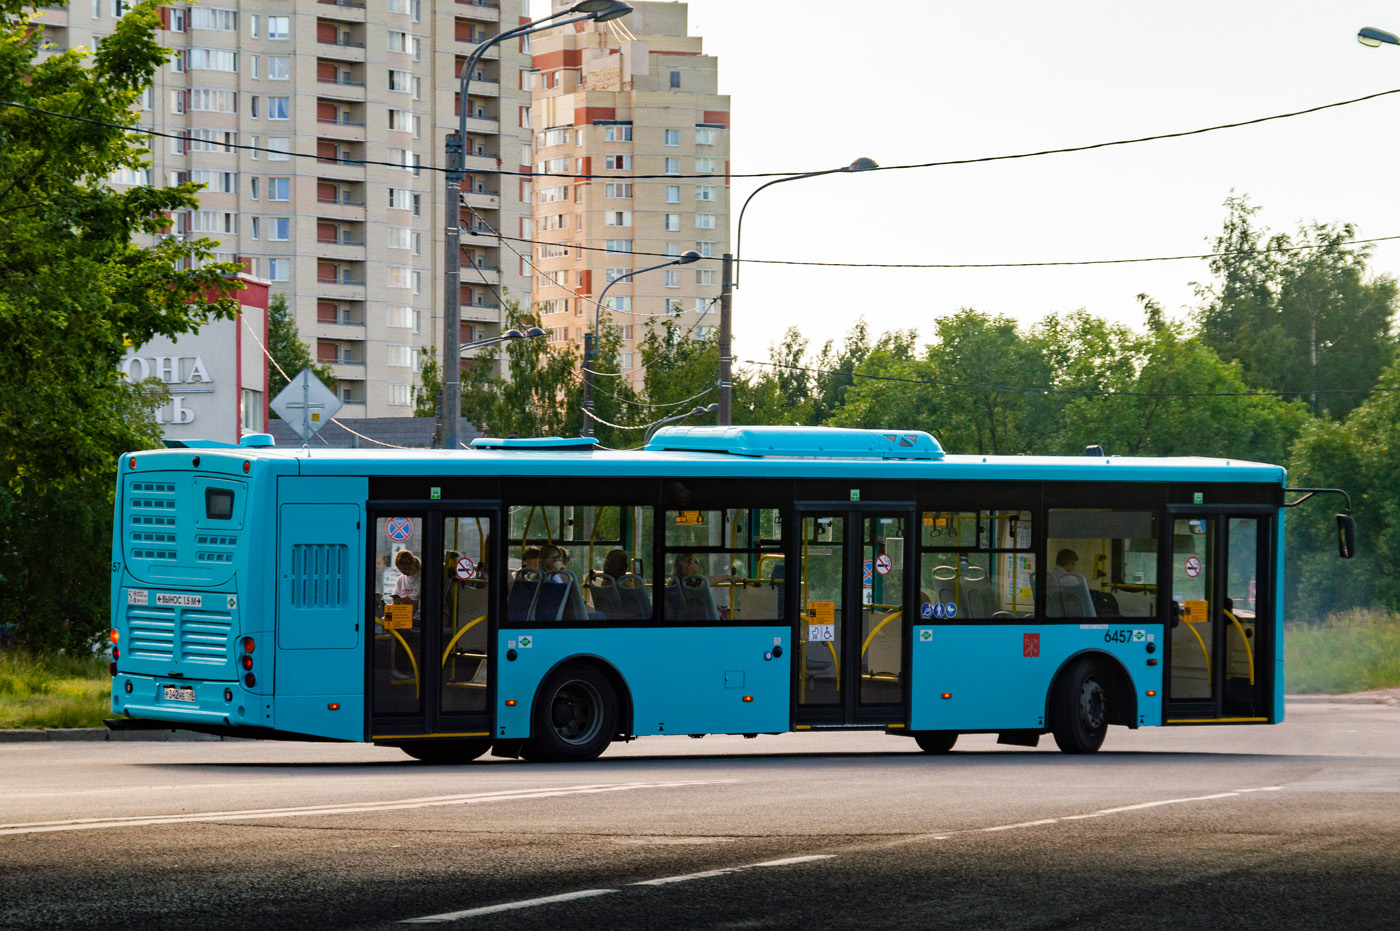 Санкт-Петербург, Volgabus-5270.G4 (LNG) № 6457